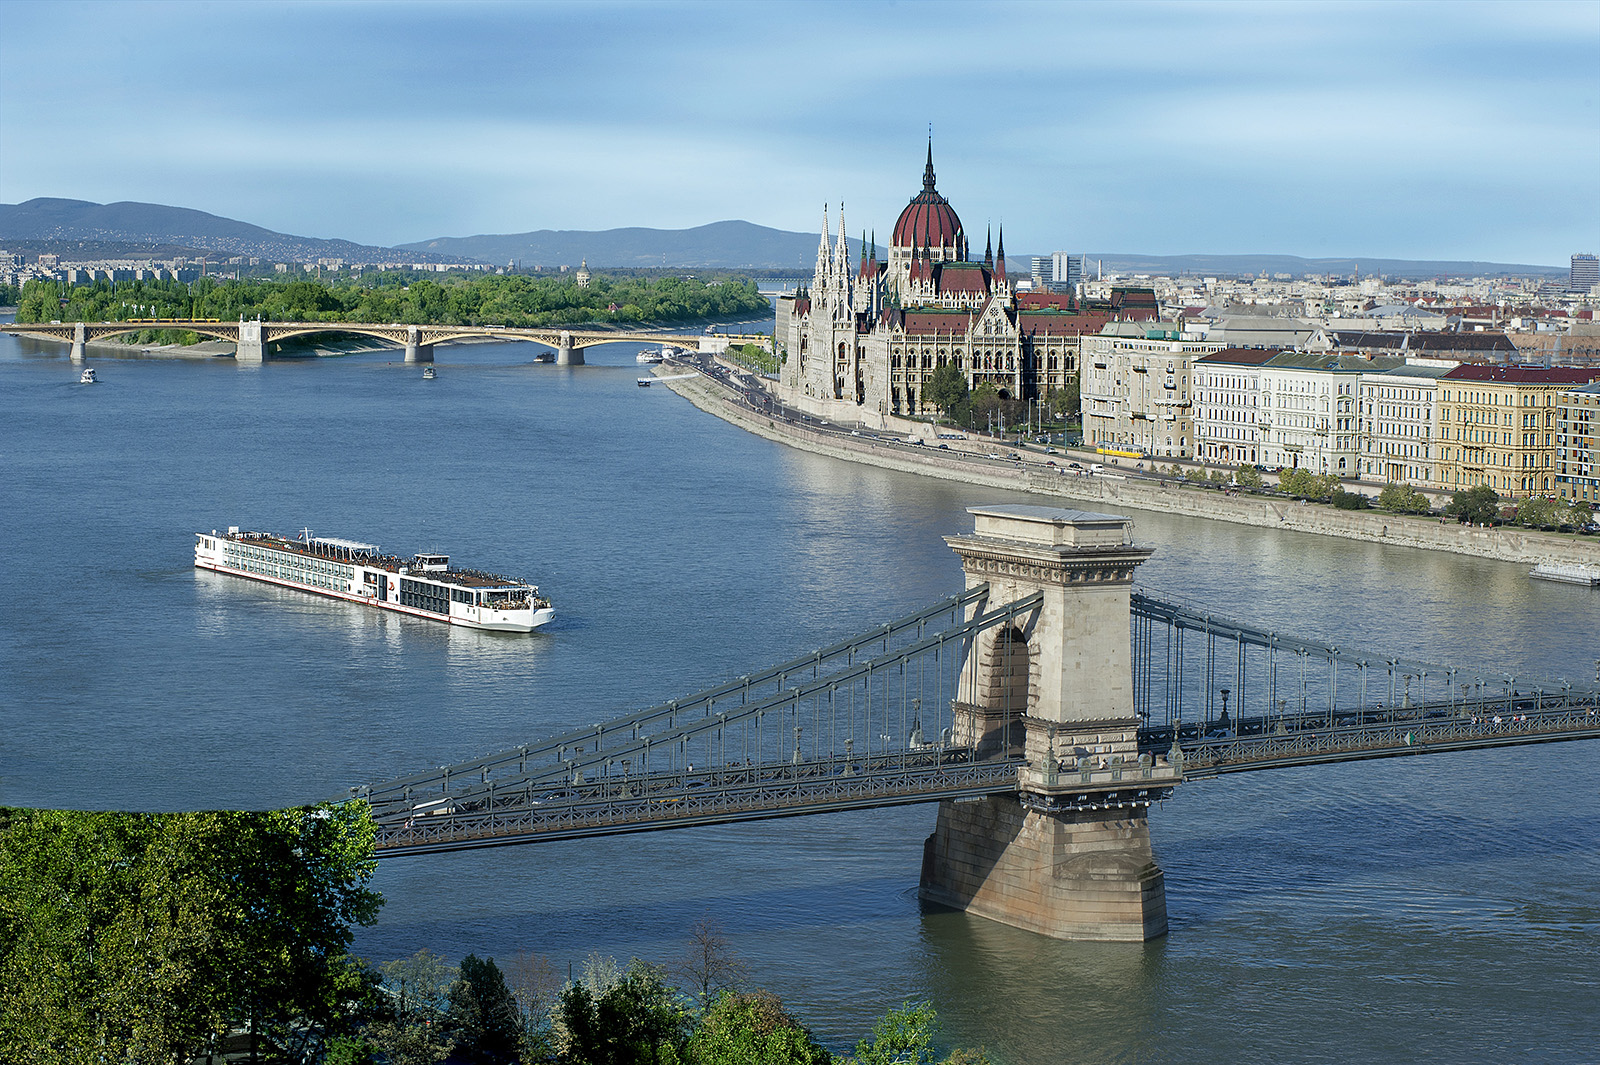 The Viking Longship sails through Budapest